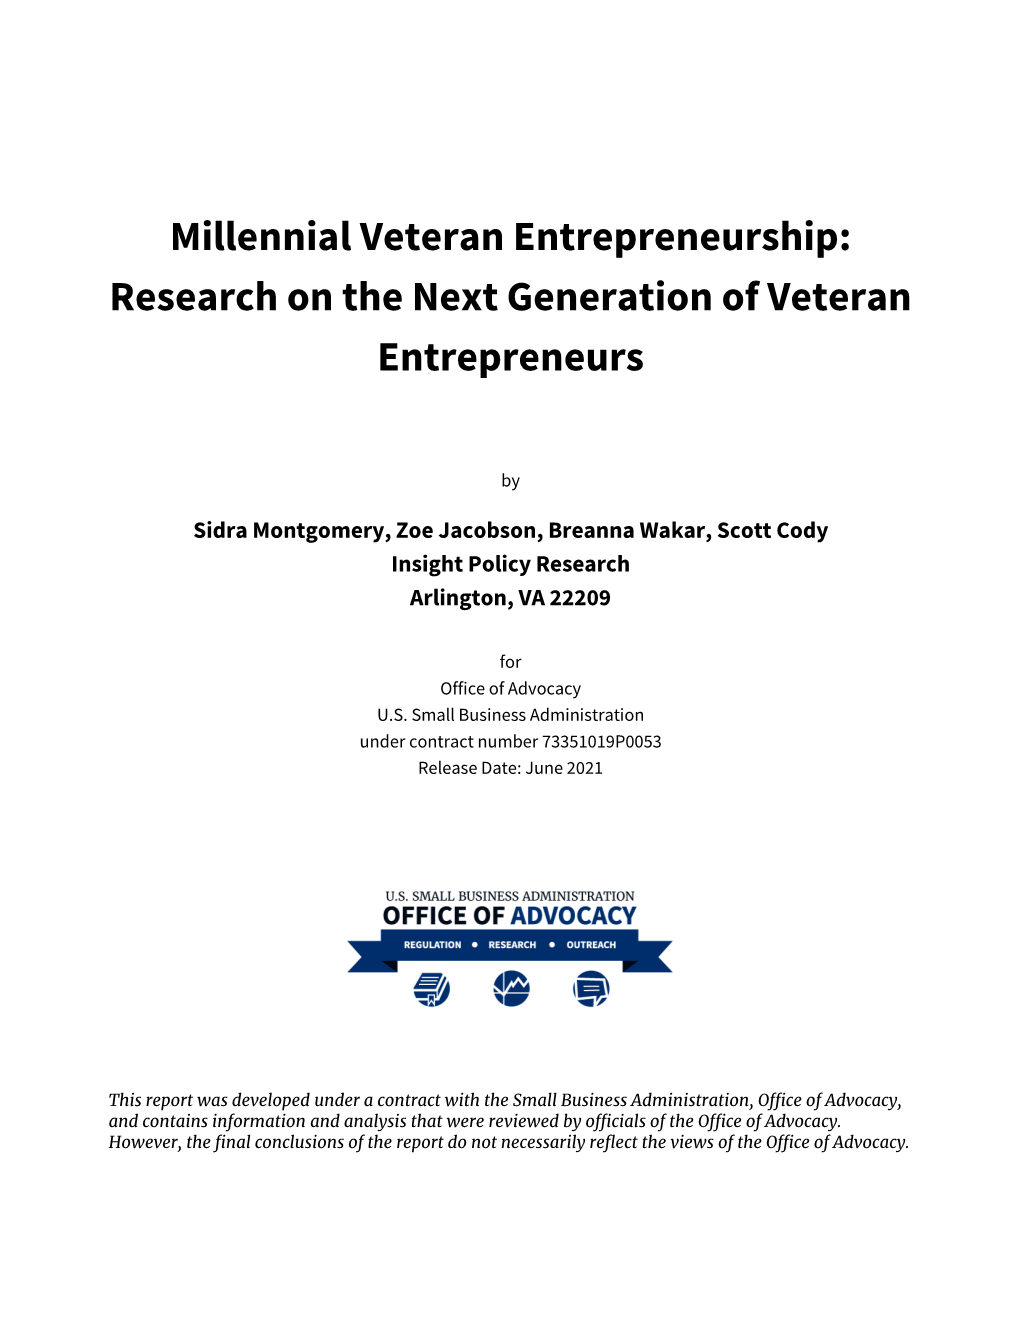 Millennial Veteran Entrepreneurship: Research on the Next Generation of Veteran Entrepreneurs